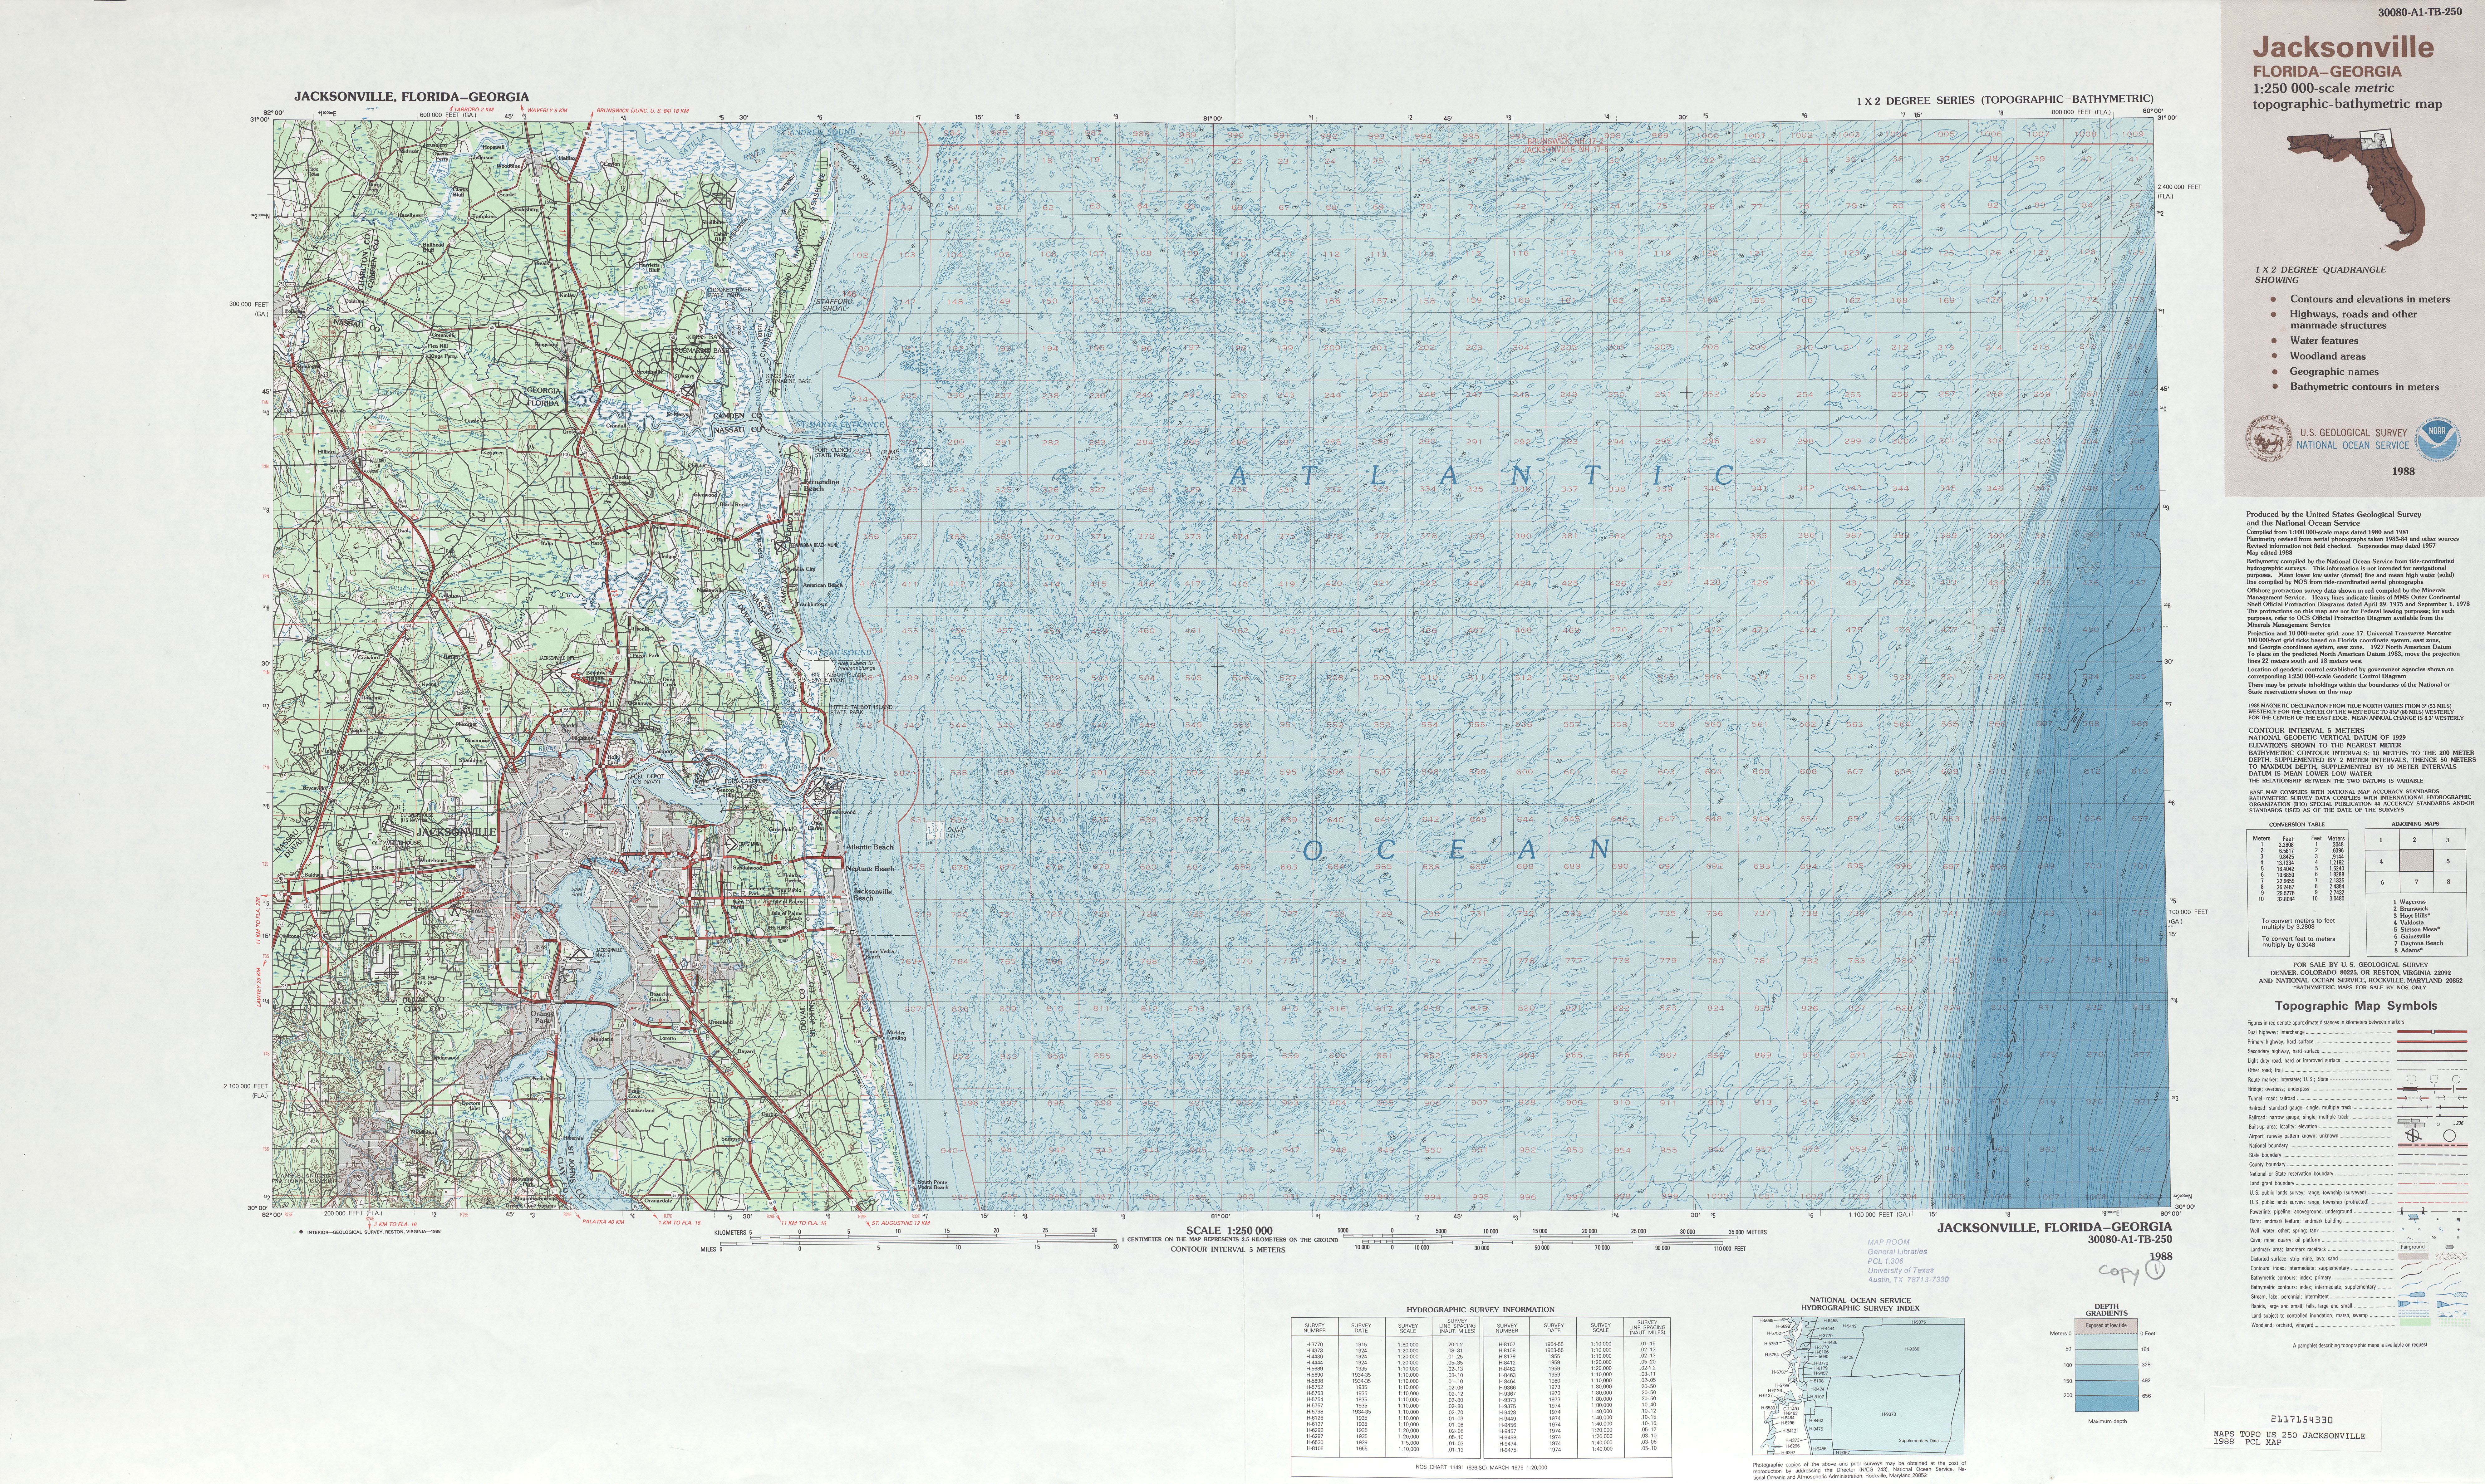 Hoja Jacksonville Mapa Topográfico de-Batimétrico, Estados Unidos 1988